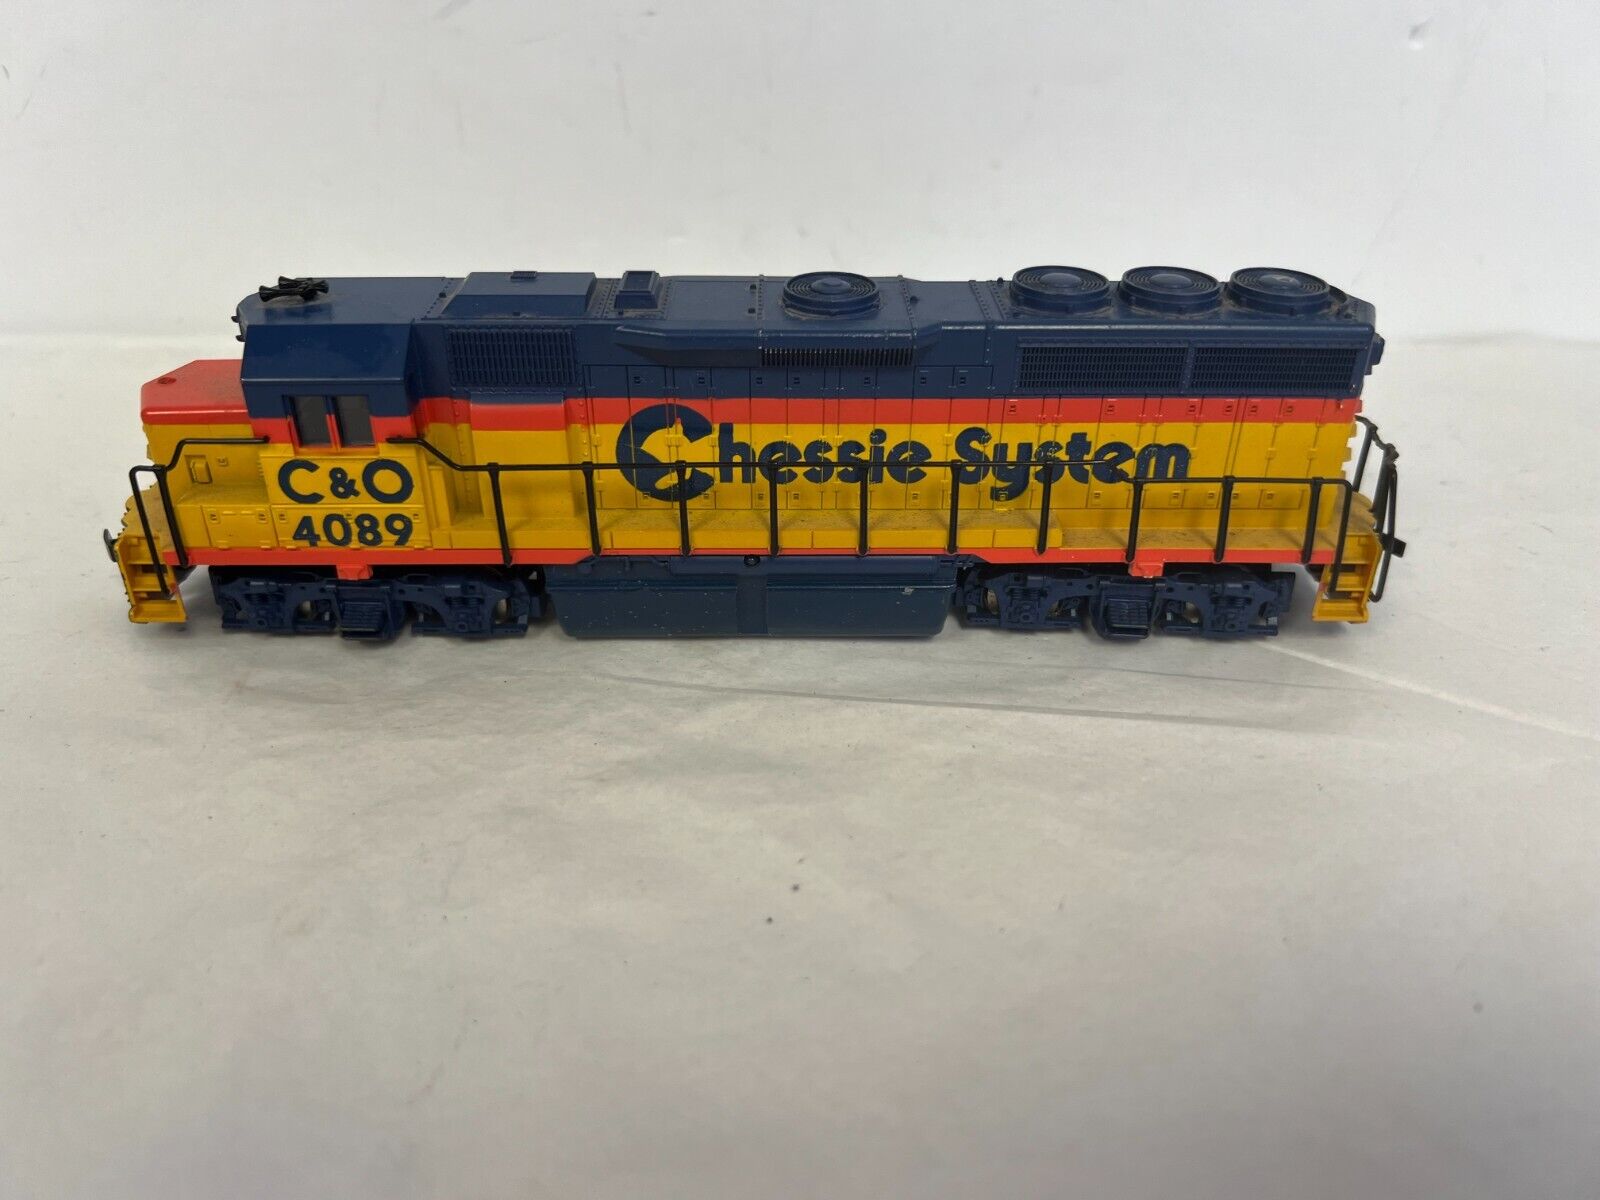 C&O CHESSIE SYSTEM 4089 GP40 Diesel Locomotive - BACHMANN HO Engine WORKS